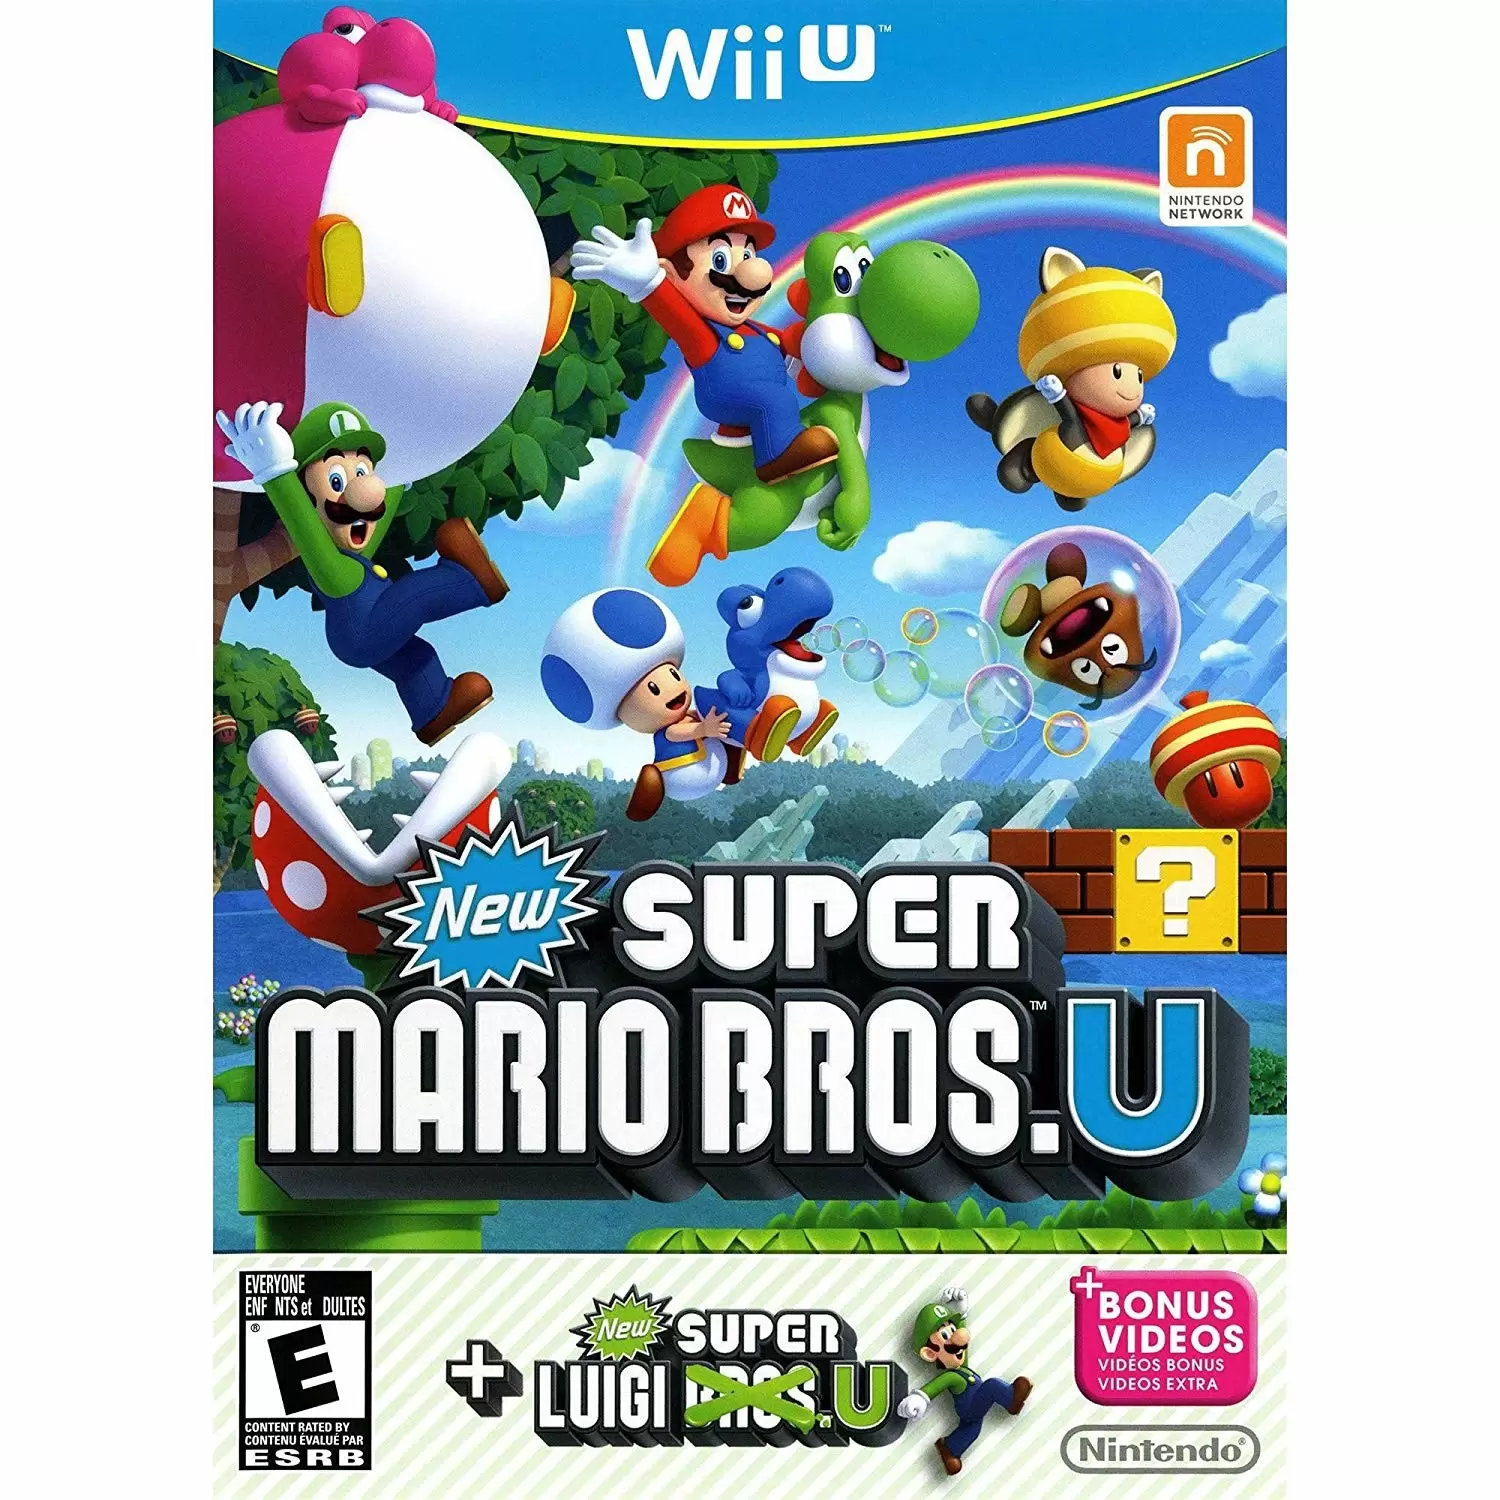 Wii U Games - New Super Mario Bros U + New Super Luigi U